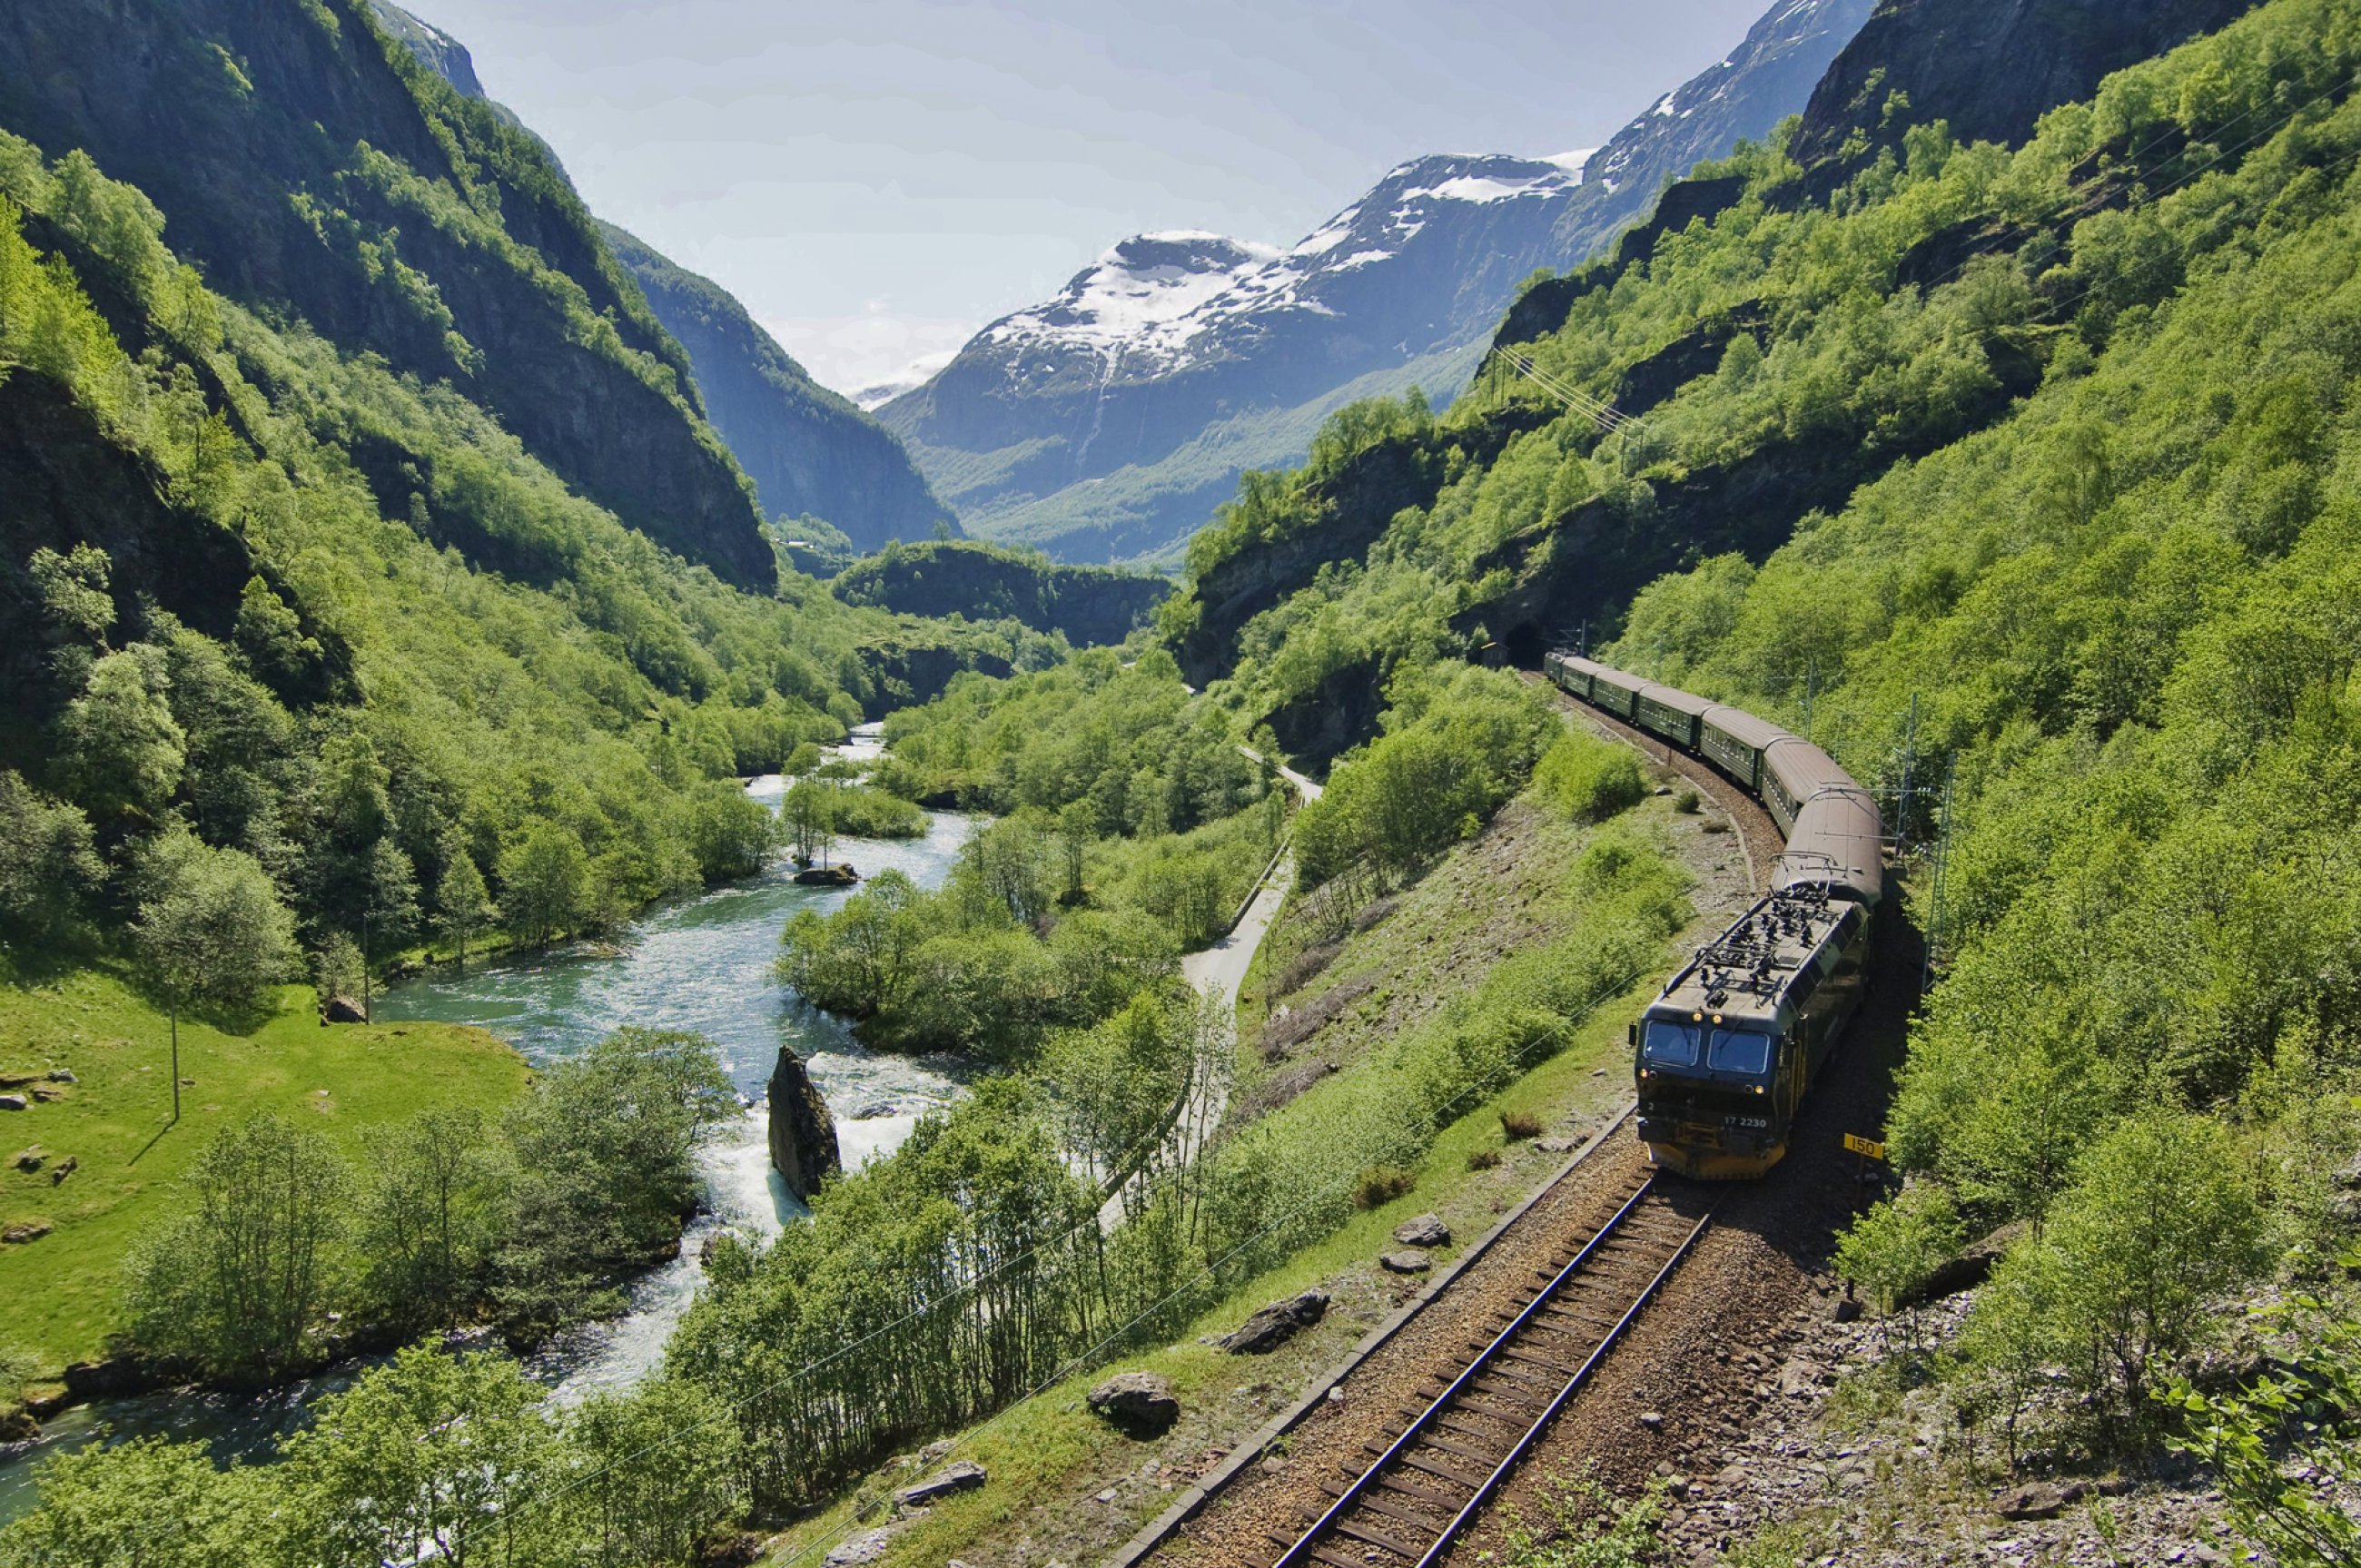 https://bubo.sk/uploads/galleries/20949/fl-m-railway-terje-rakke-nordic-life-as-fjord-norw.jpg